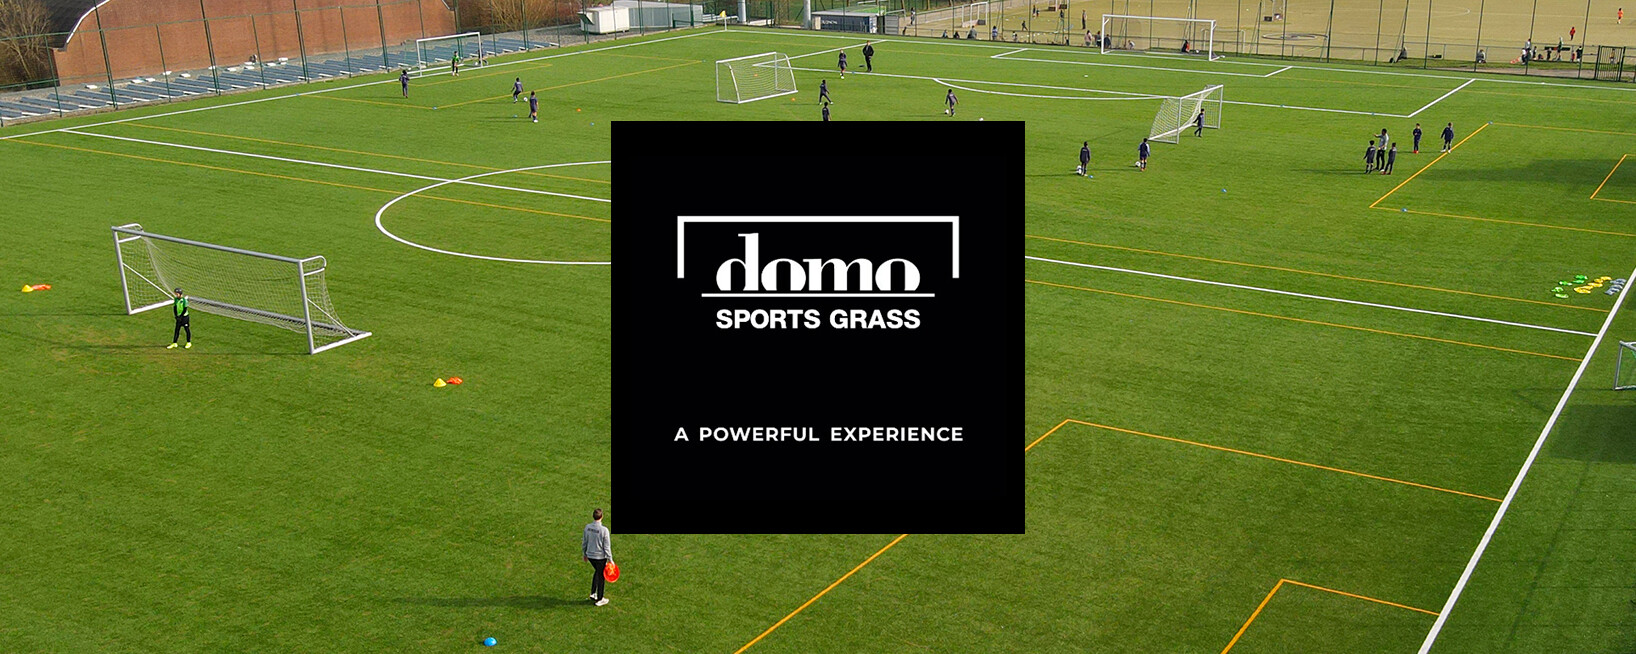 RSC Anderlecht vertelt over hun Domo Sports Grass ervaring